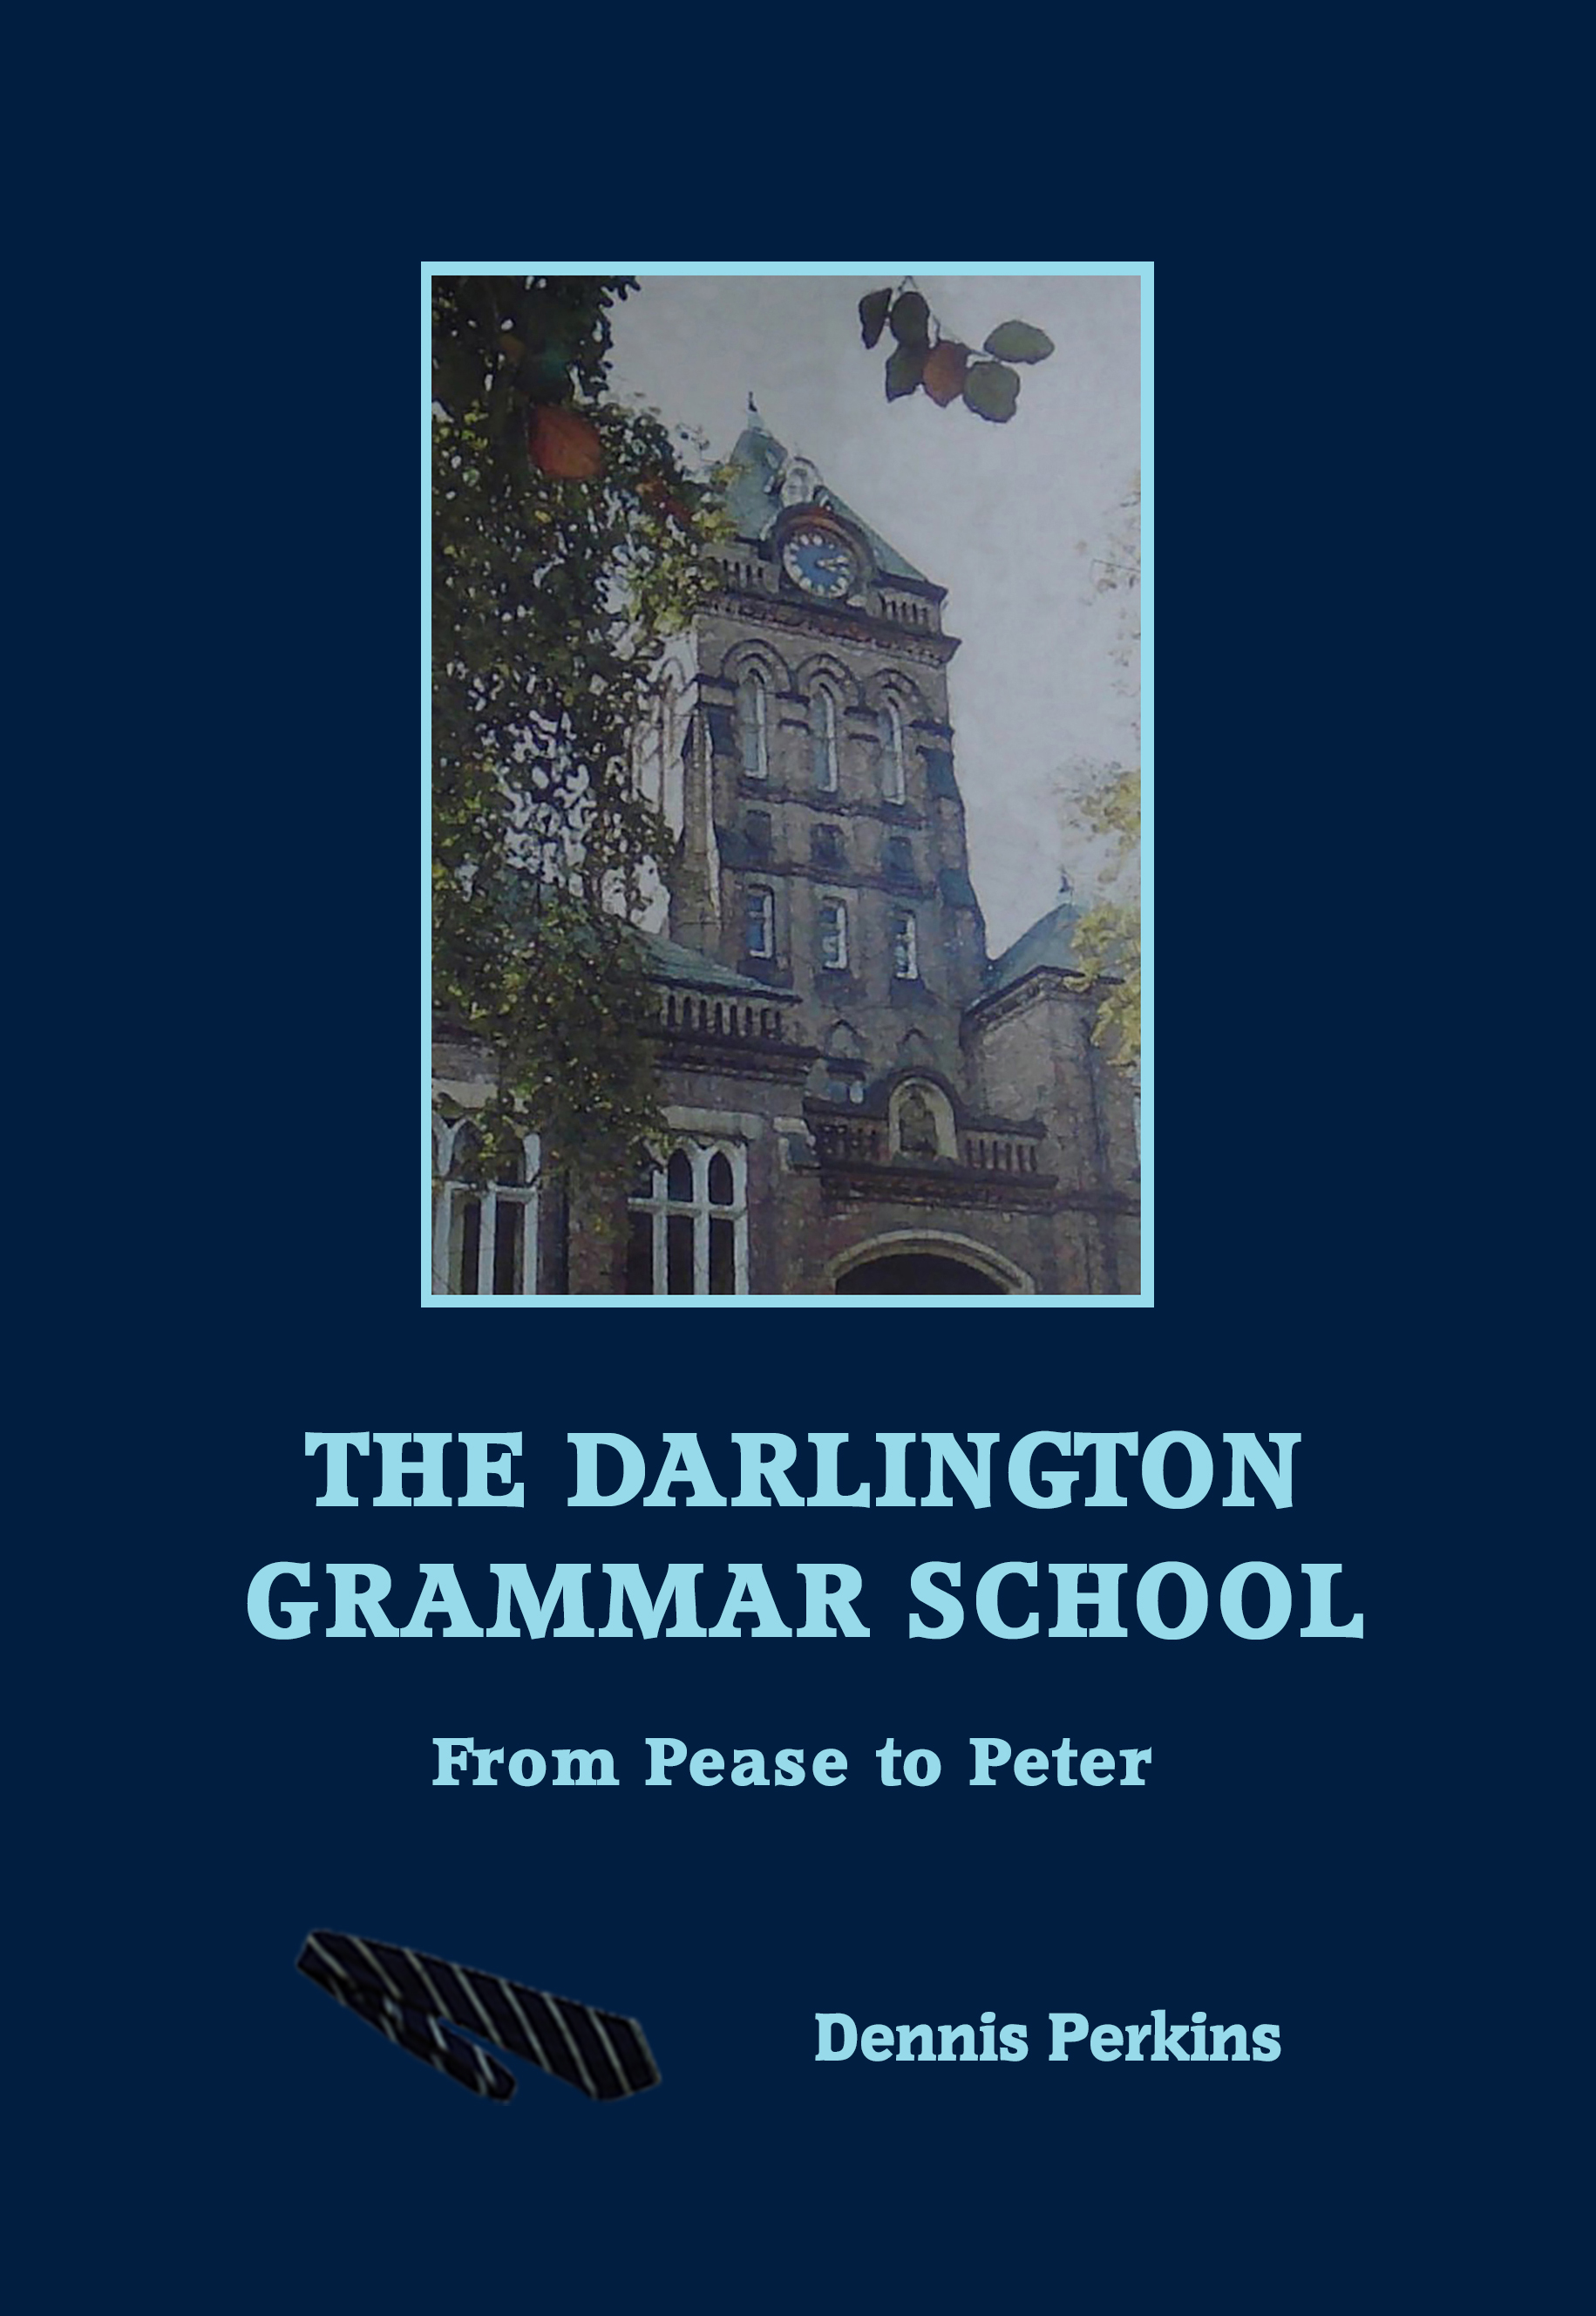 Darlington Grammar School